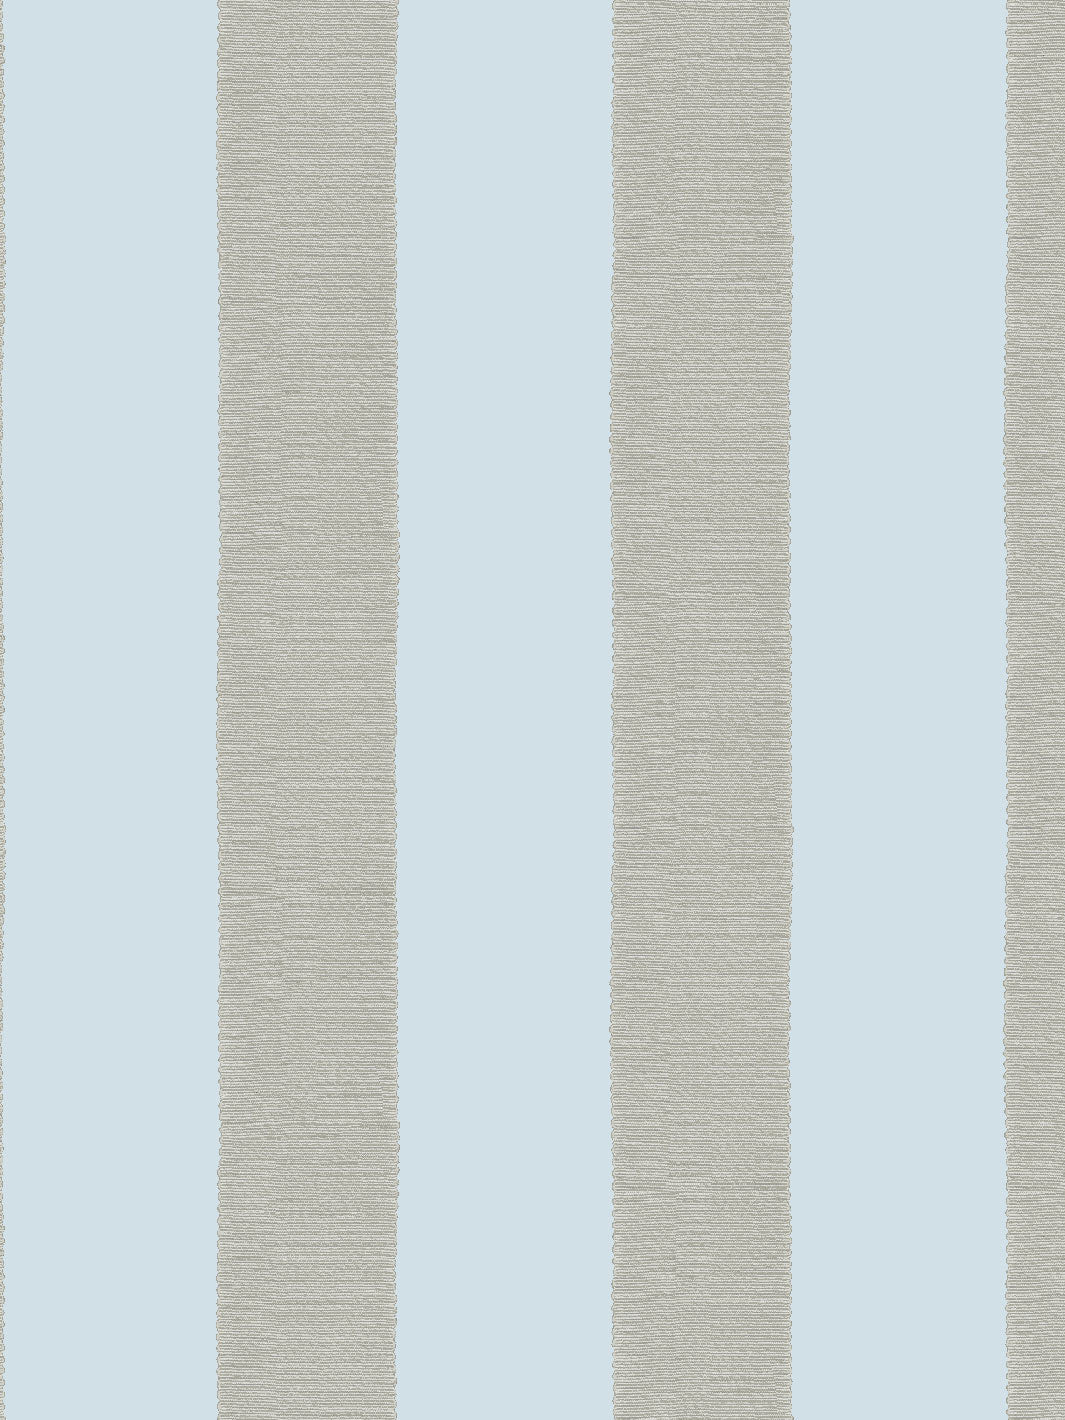 'Grosgrain Stripe' Wallpaper by Sarah Jessica Parker - Misty Blue Metal